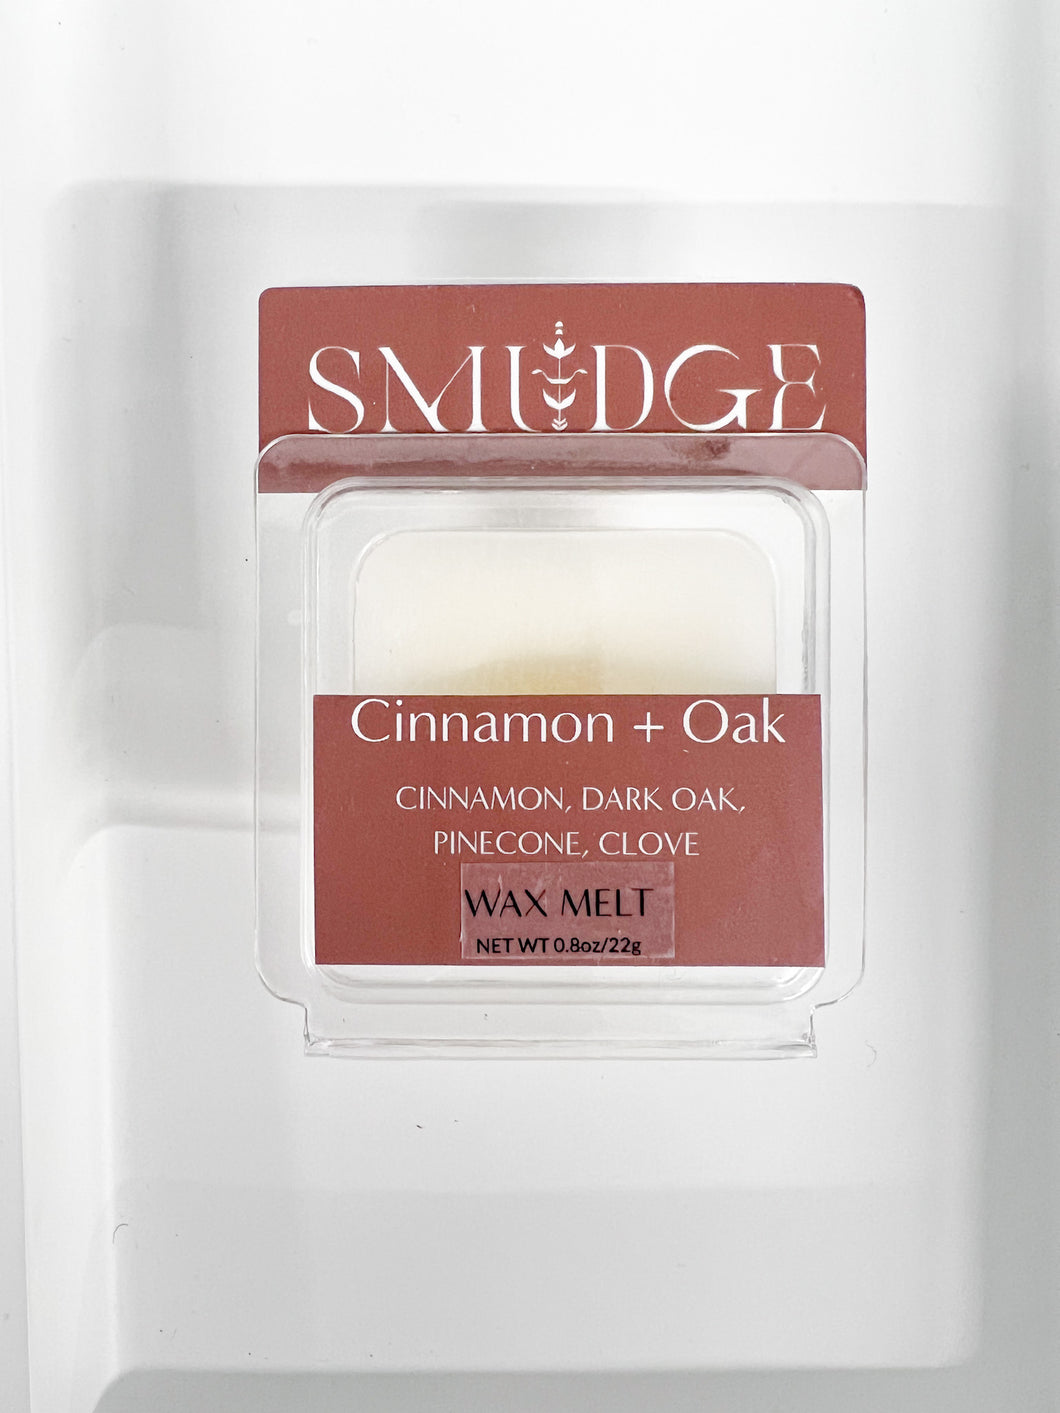 Cinnamon + Oak Wax Melt 0.8oz